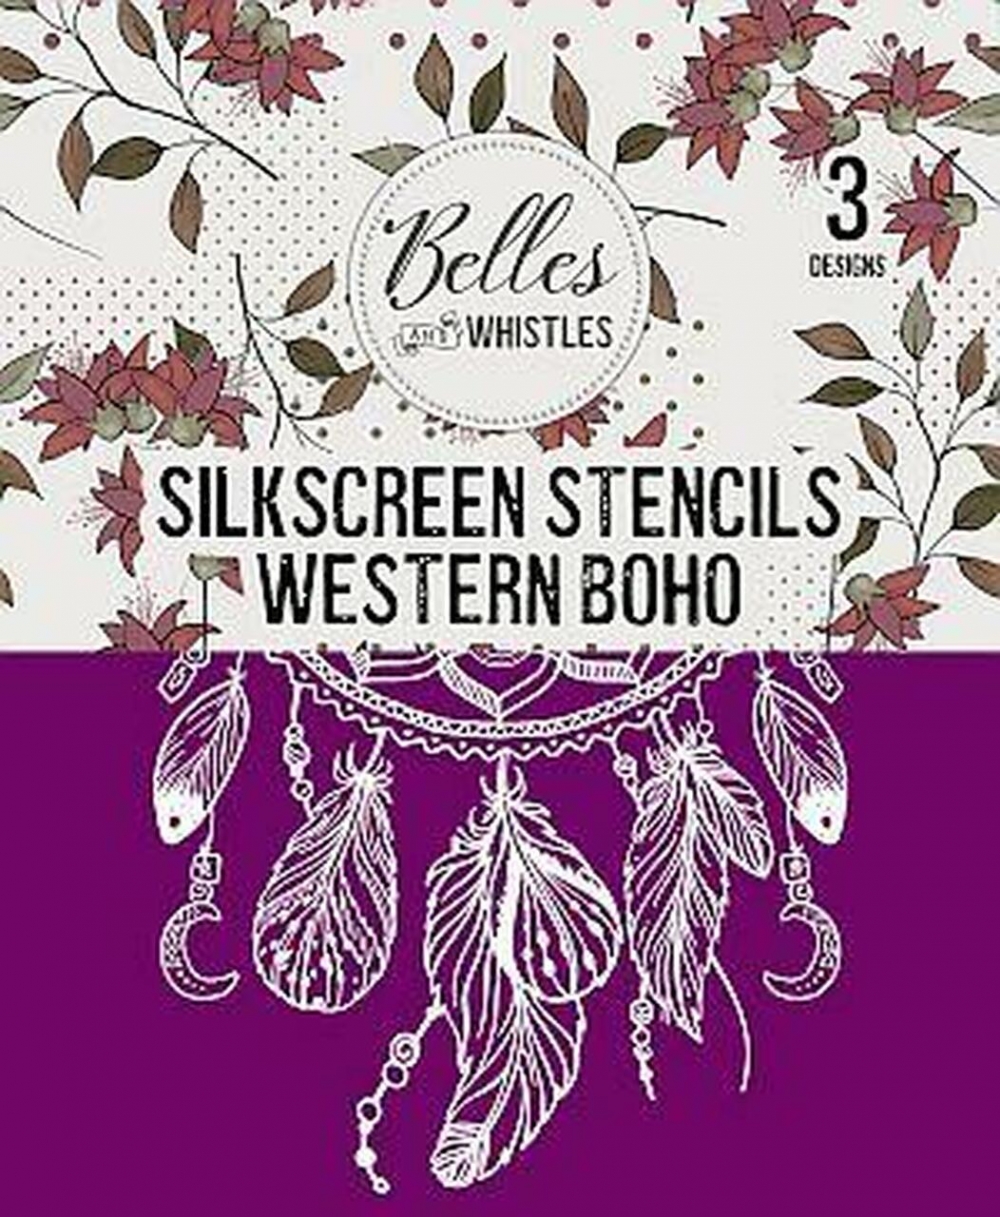 Belles and Whistles Silkscreen Stencil – Lightweight Adhesive – Reusable – Western Boho 20x25cm